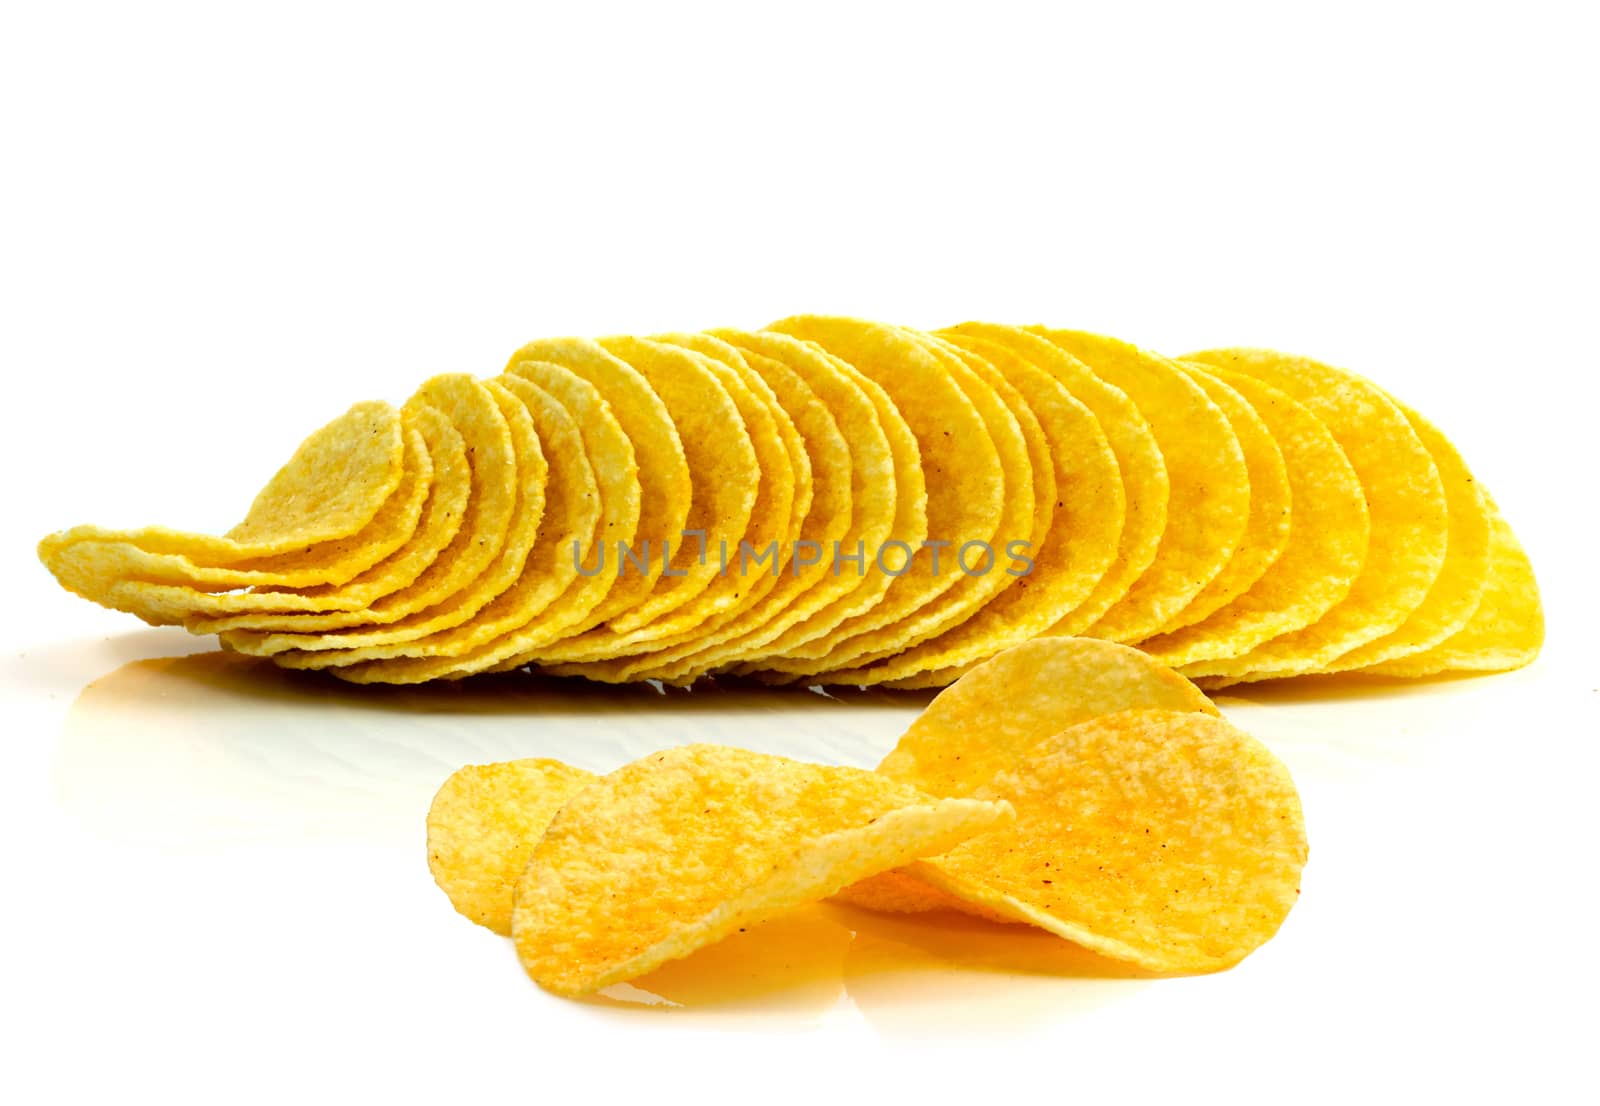 Potato Chips on a white background by sompongtom